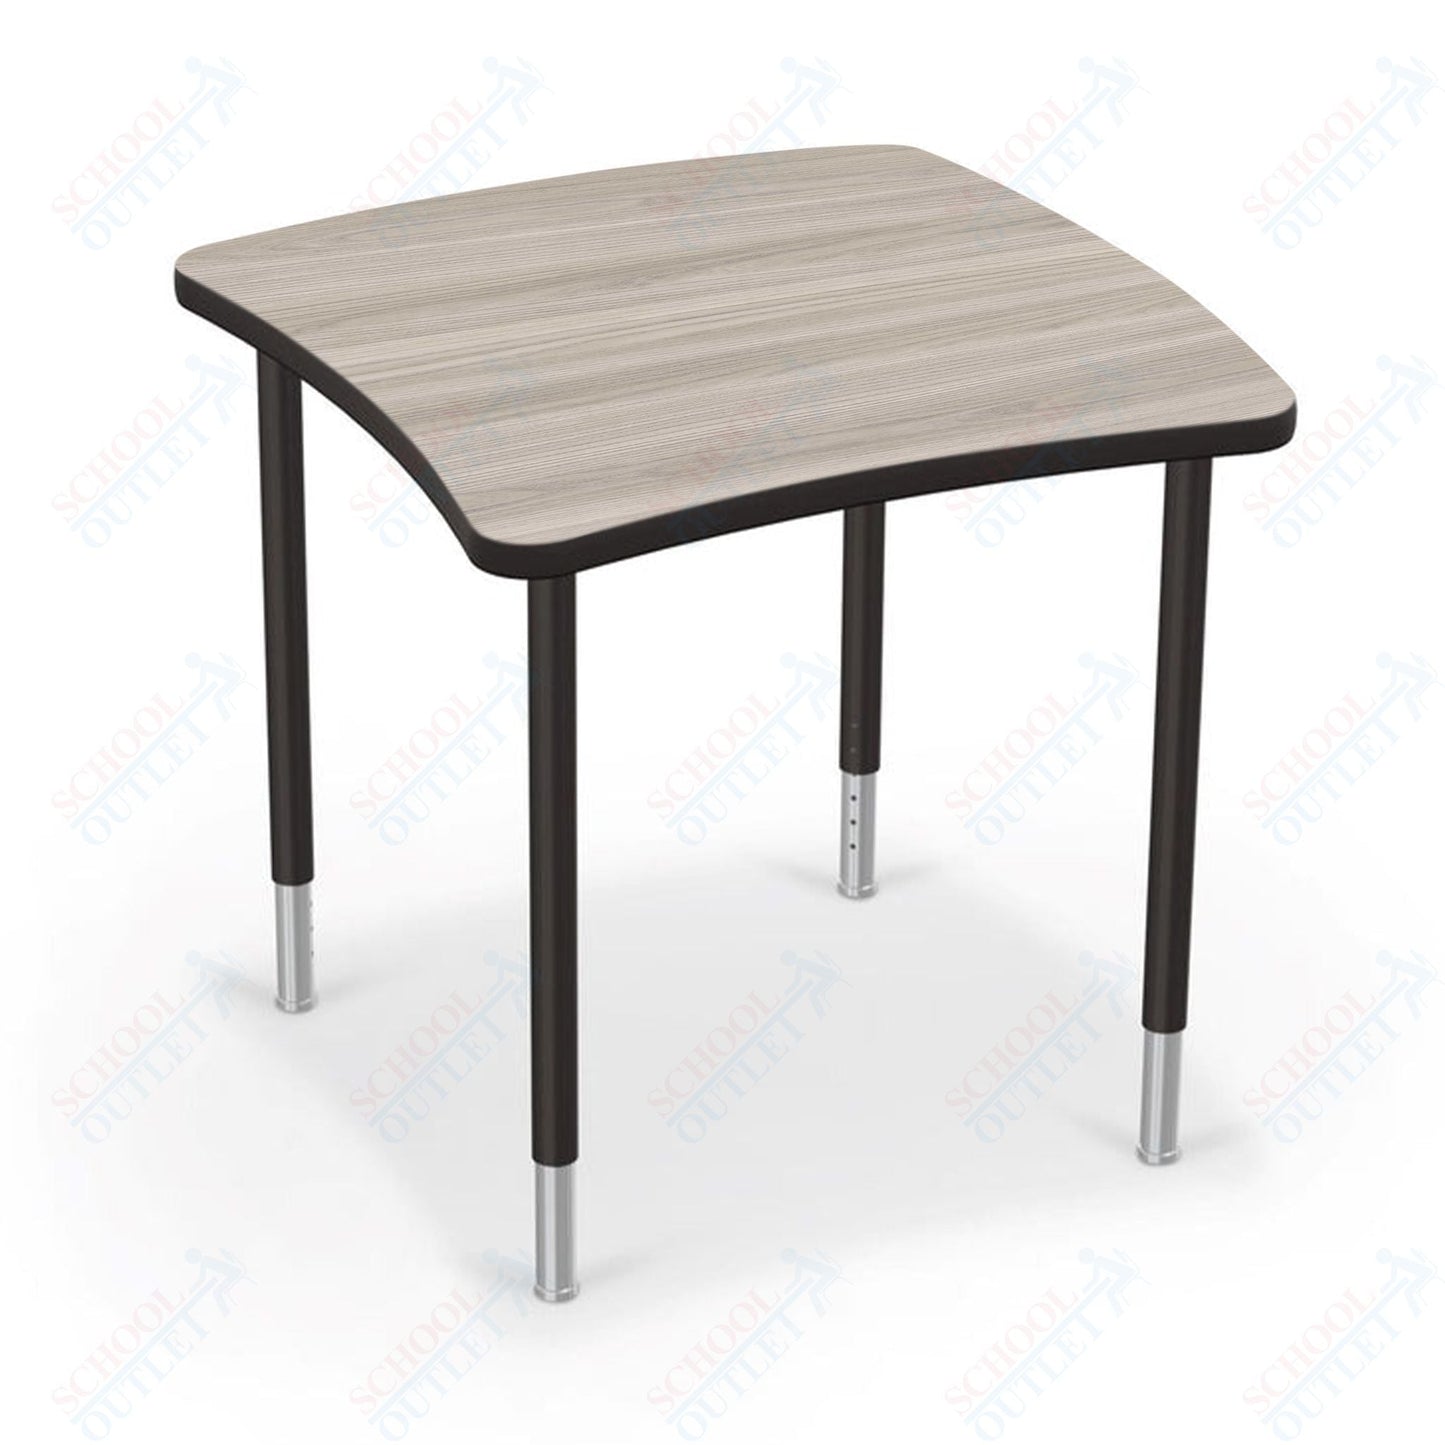 Mooreco Creator Configurable Tables - Square - Black Edgeband - Black Legs (Mooreco 1633M1) - SchoolOutlet